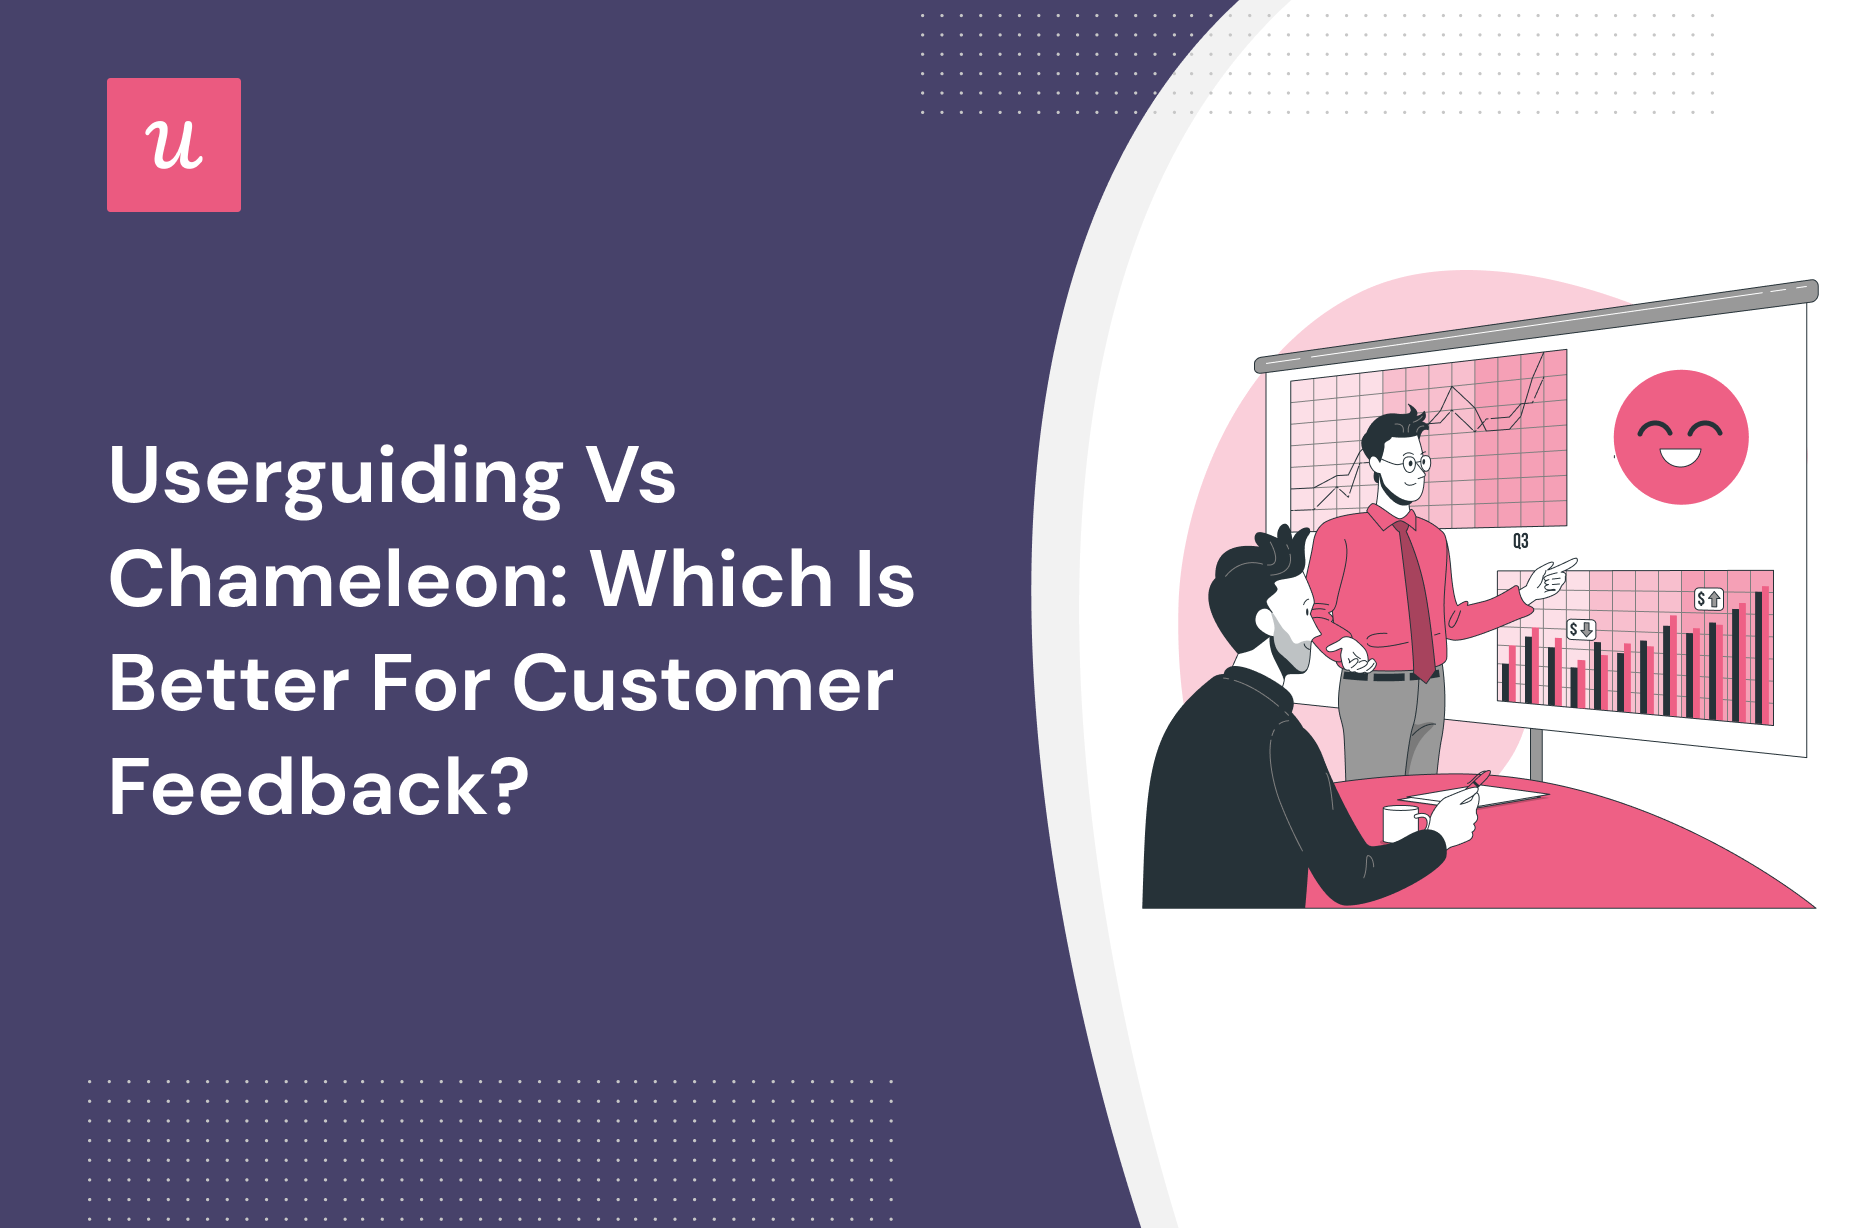 Userguiding vs Chameleon Which is Better for Customer Feedback